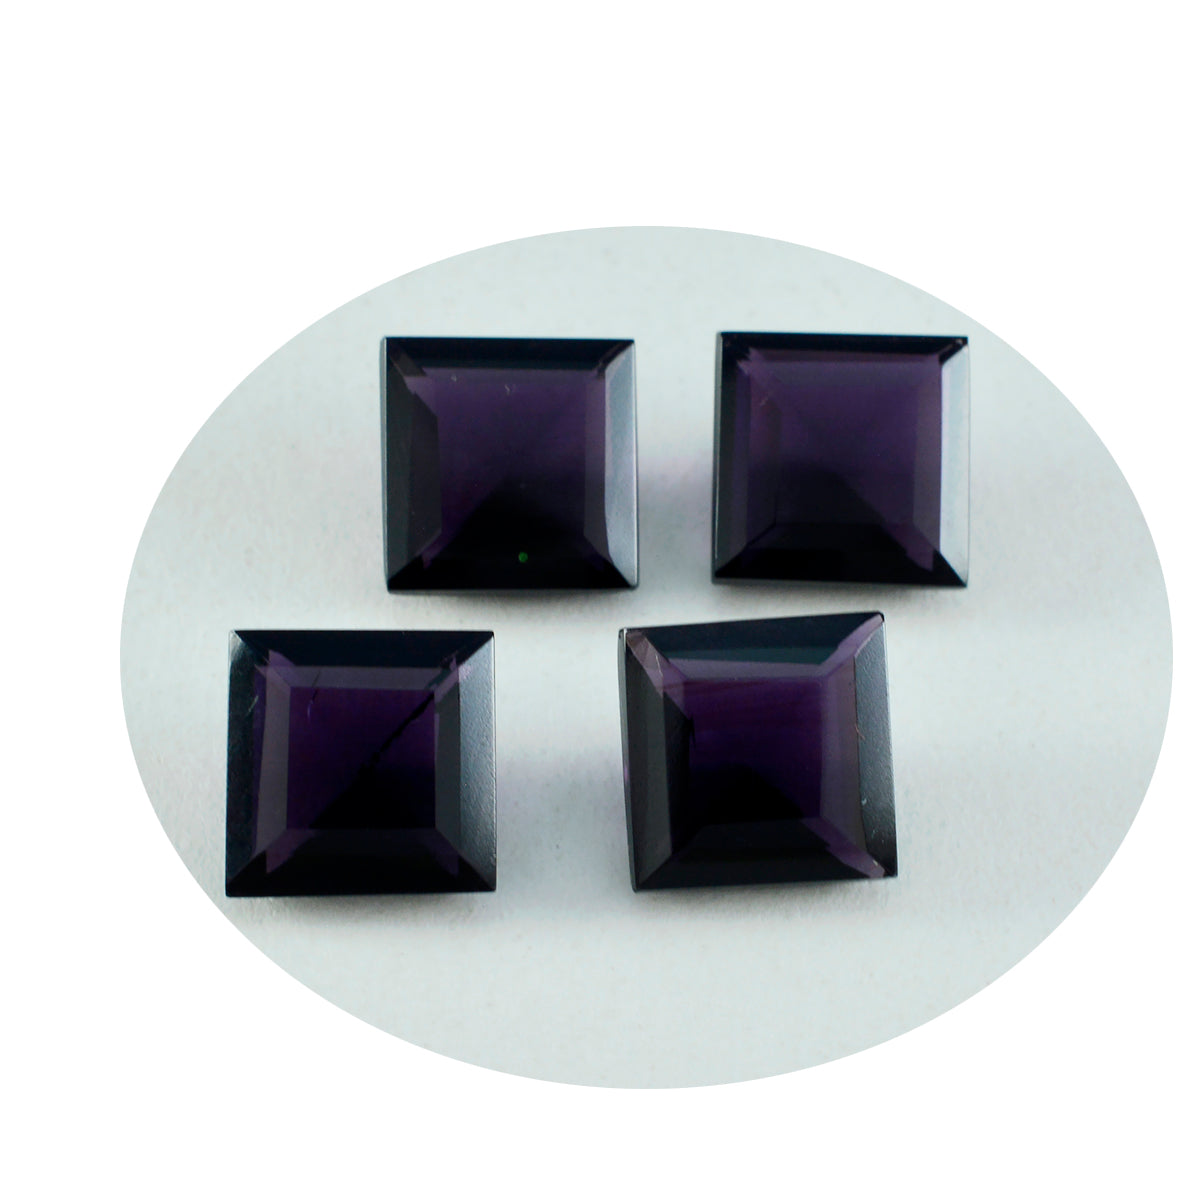 Riyogems 1PC Purple Amethyst CZ Faceted 15x15 mm Square Shape A+ Quality Stone